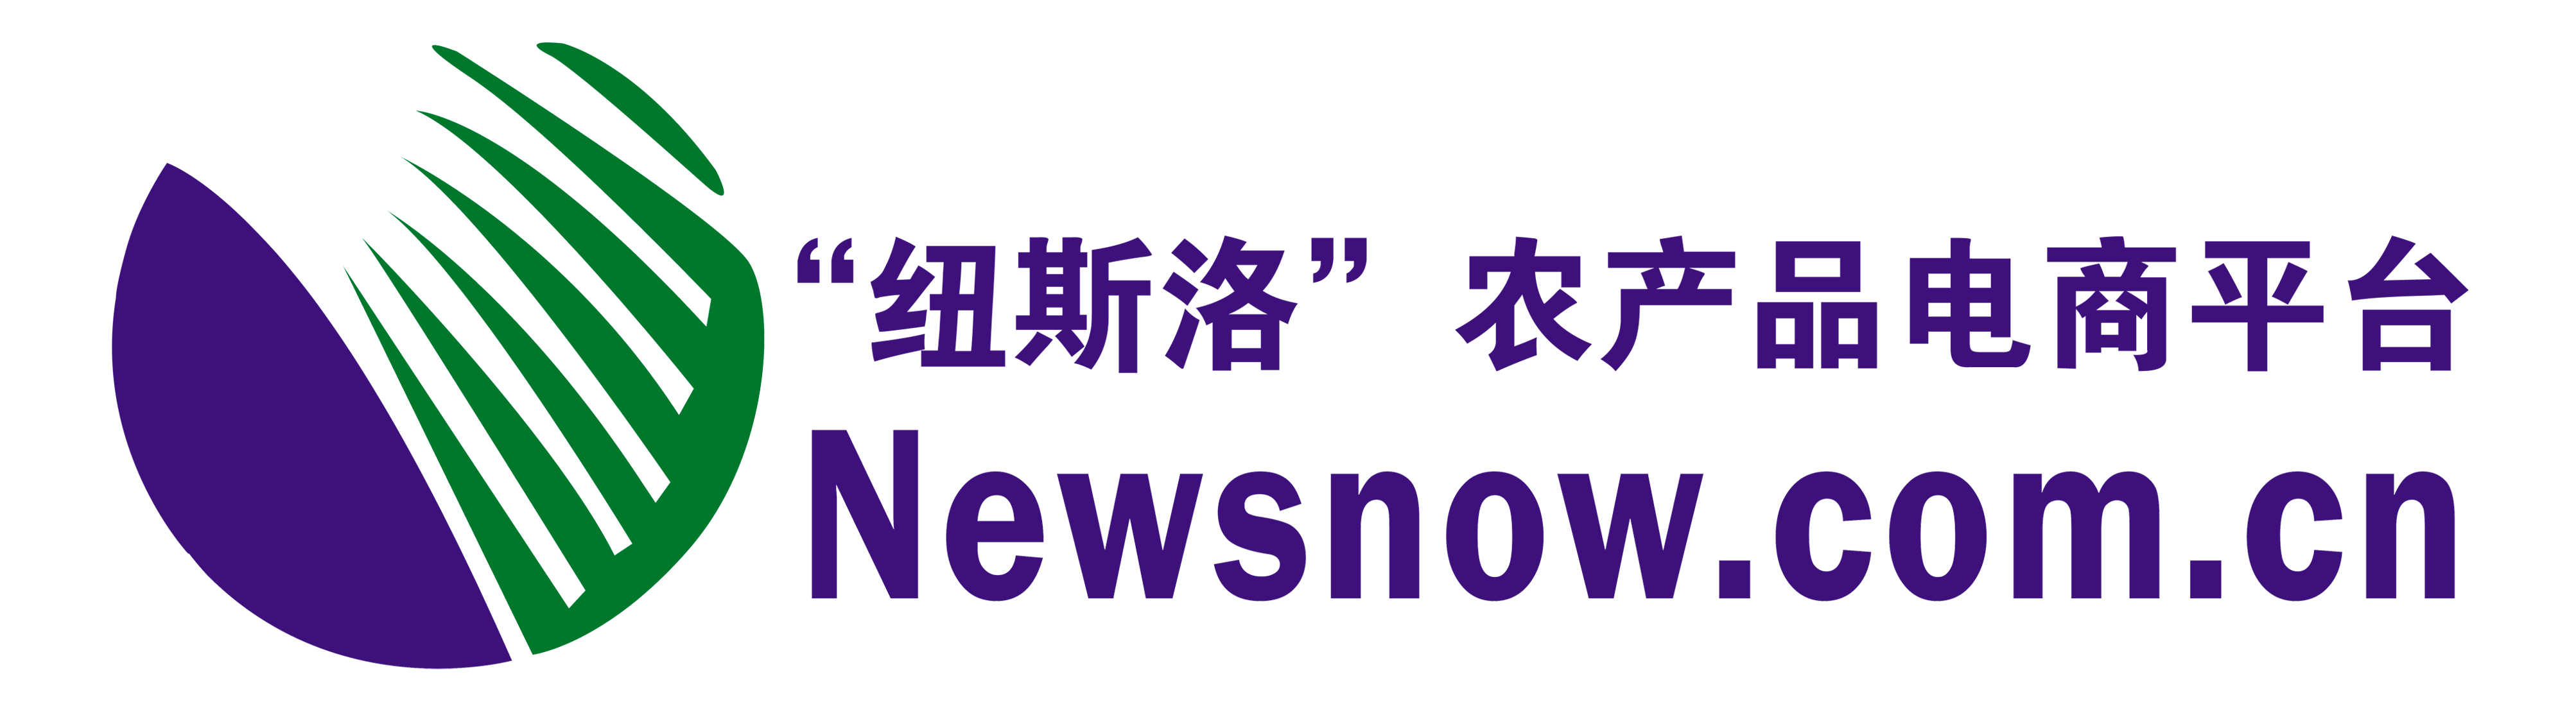 newsnow-logo.gif